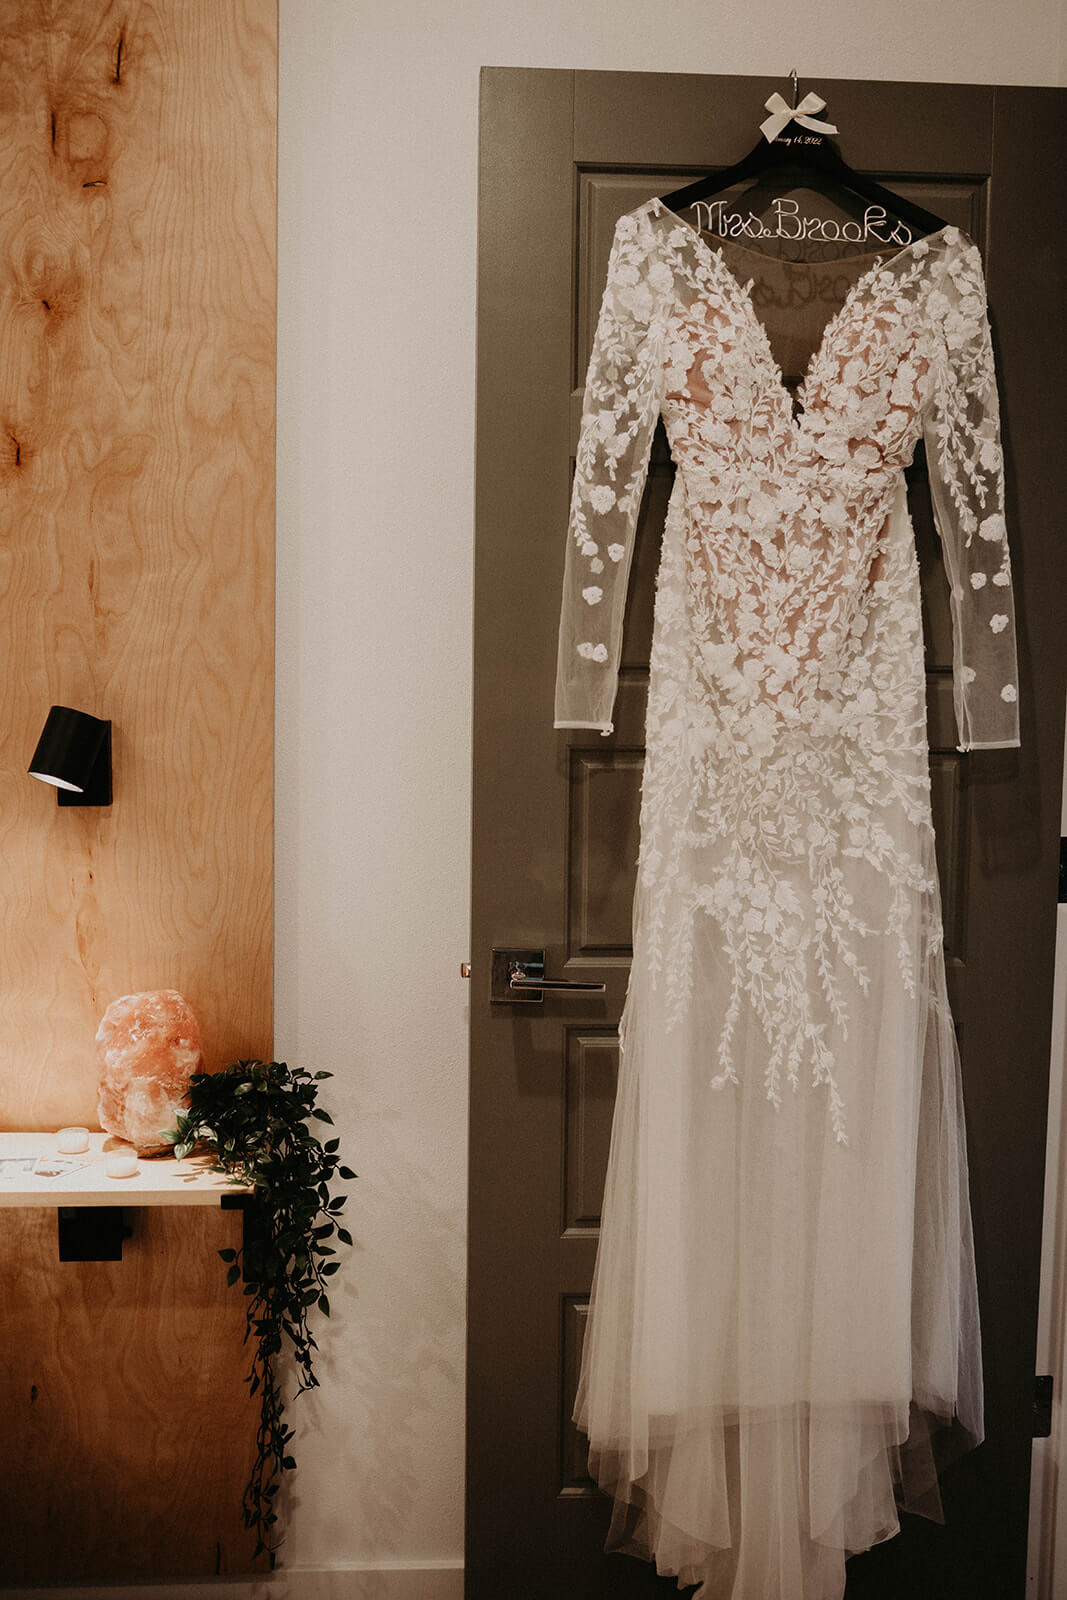 Lace wedding dress hanging on wood door